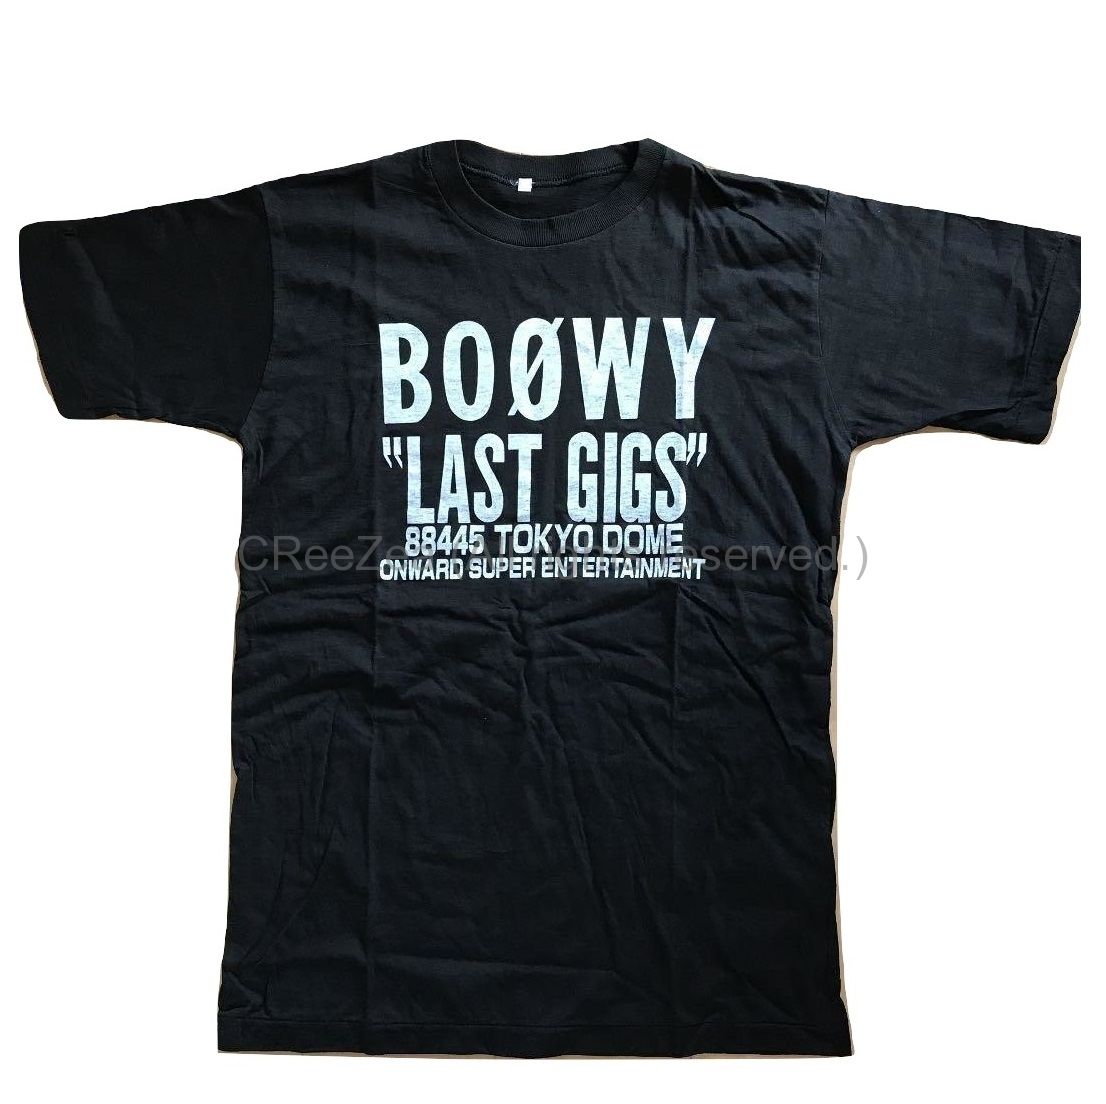 BOOWY Tシャツ 解散発表以前のもの 激レア - ミュージシャン